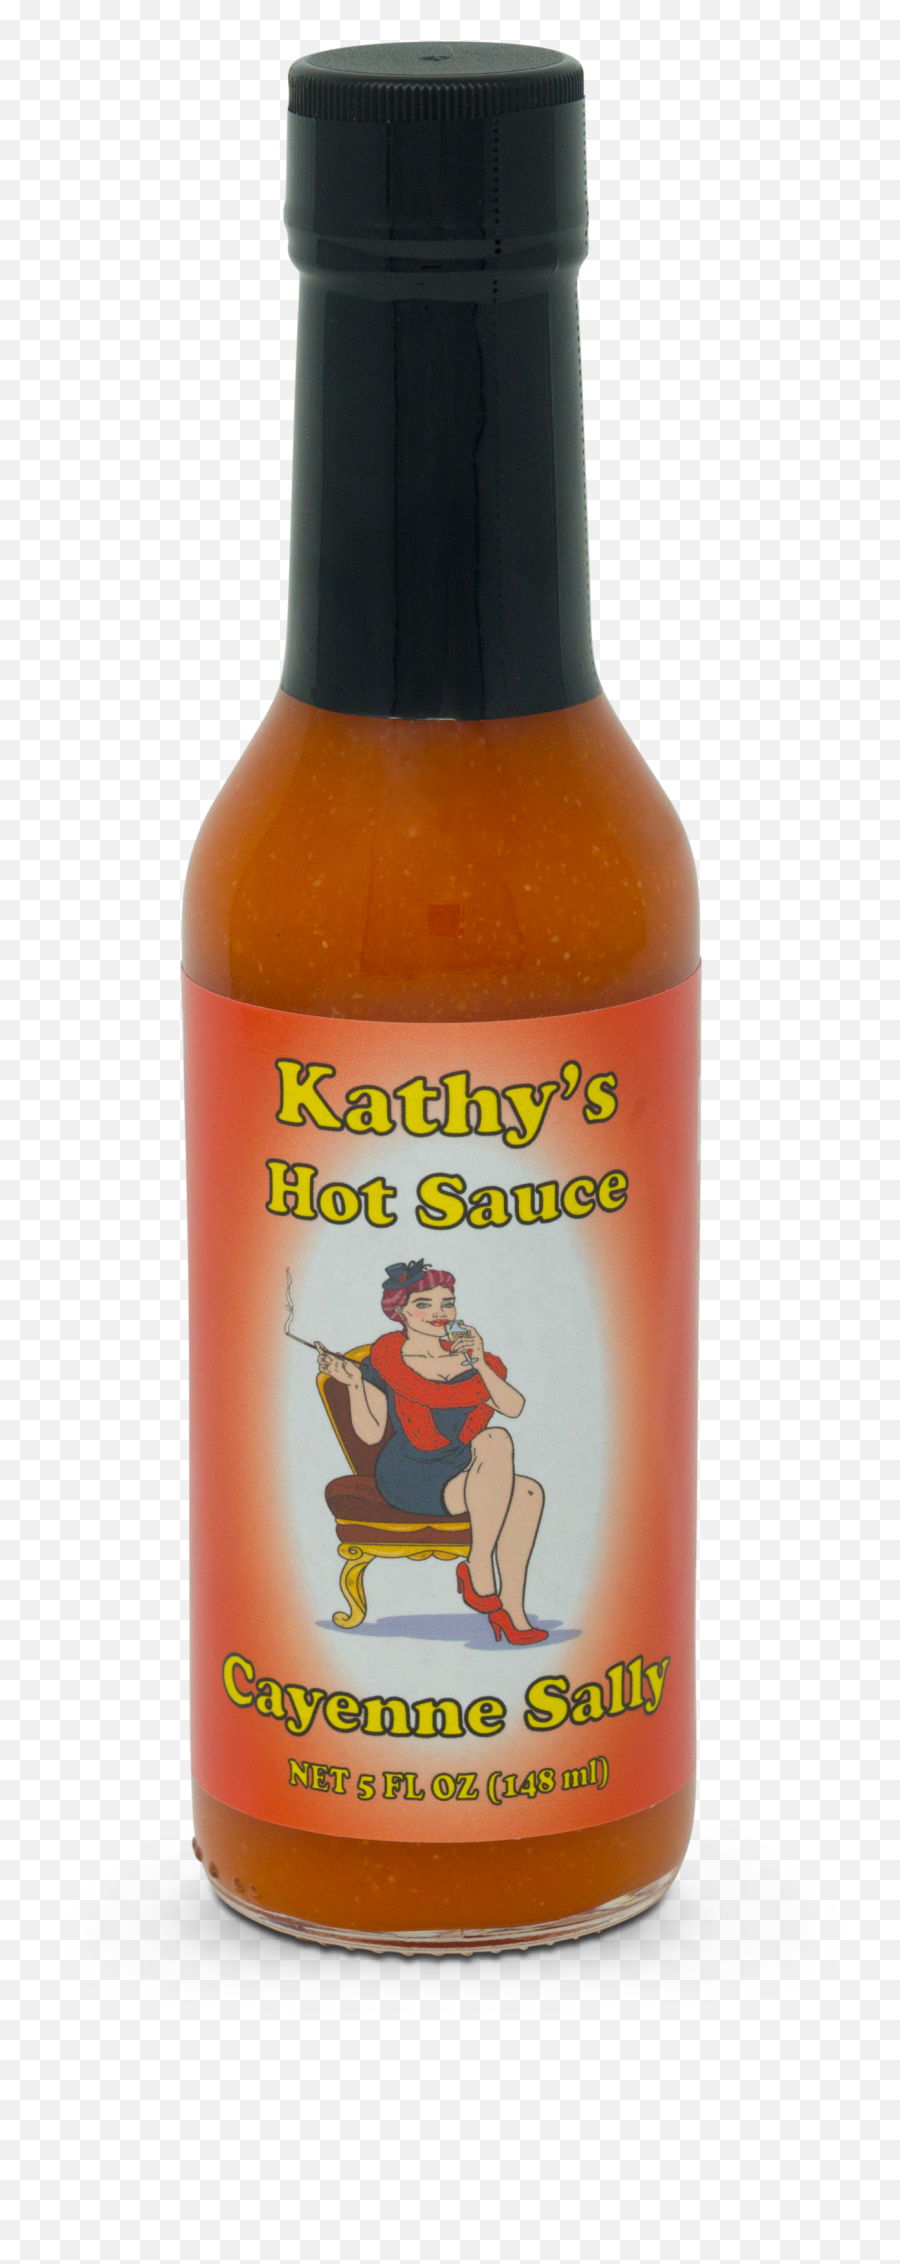 Kathyu0027s Cayenne Sally Garlic Hot Sauce Emoji,Hot Love & Emotion Virginelle